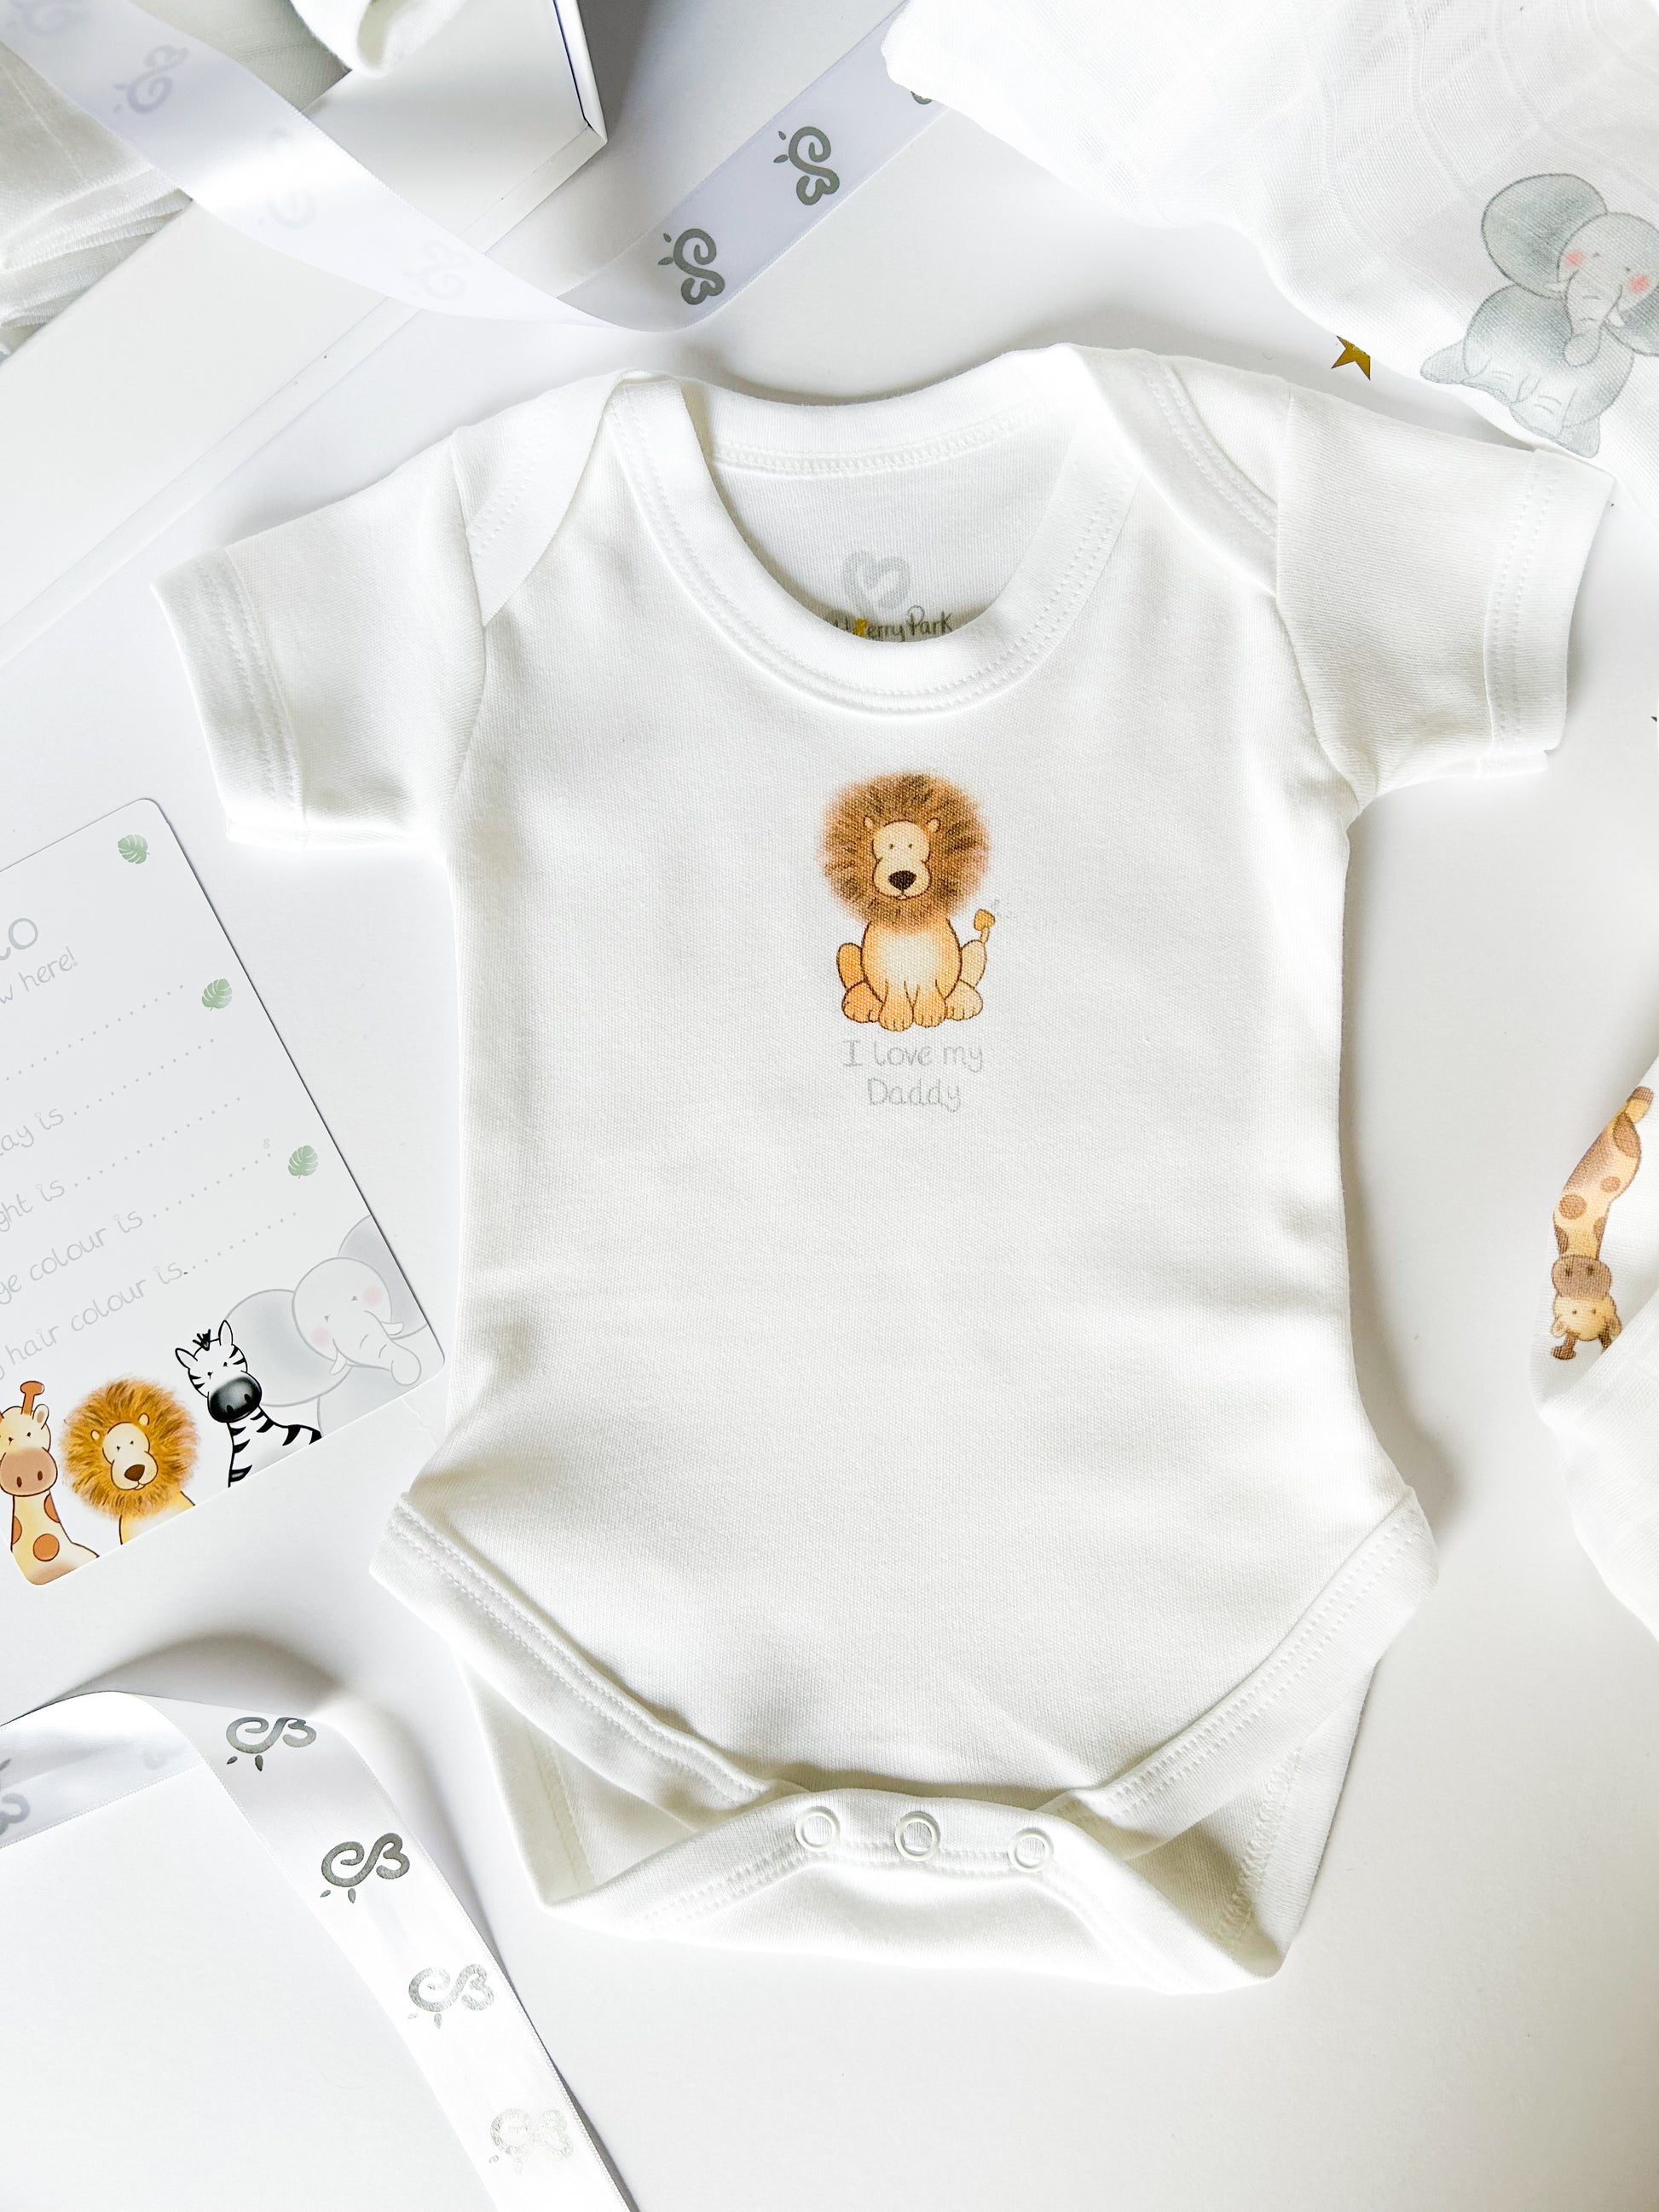 baby vest with safari animal design with safari baby milestone cards, muslin cloth and gift box